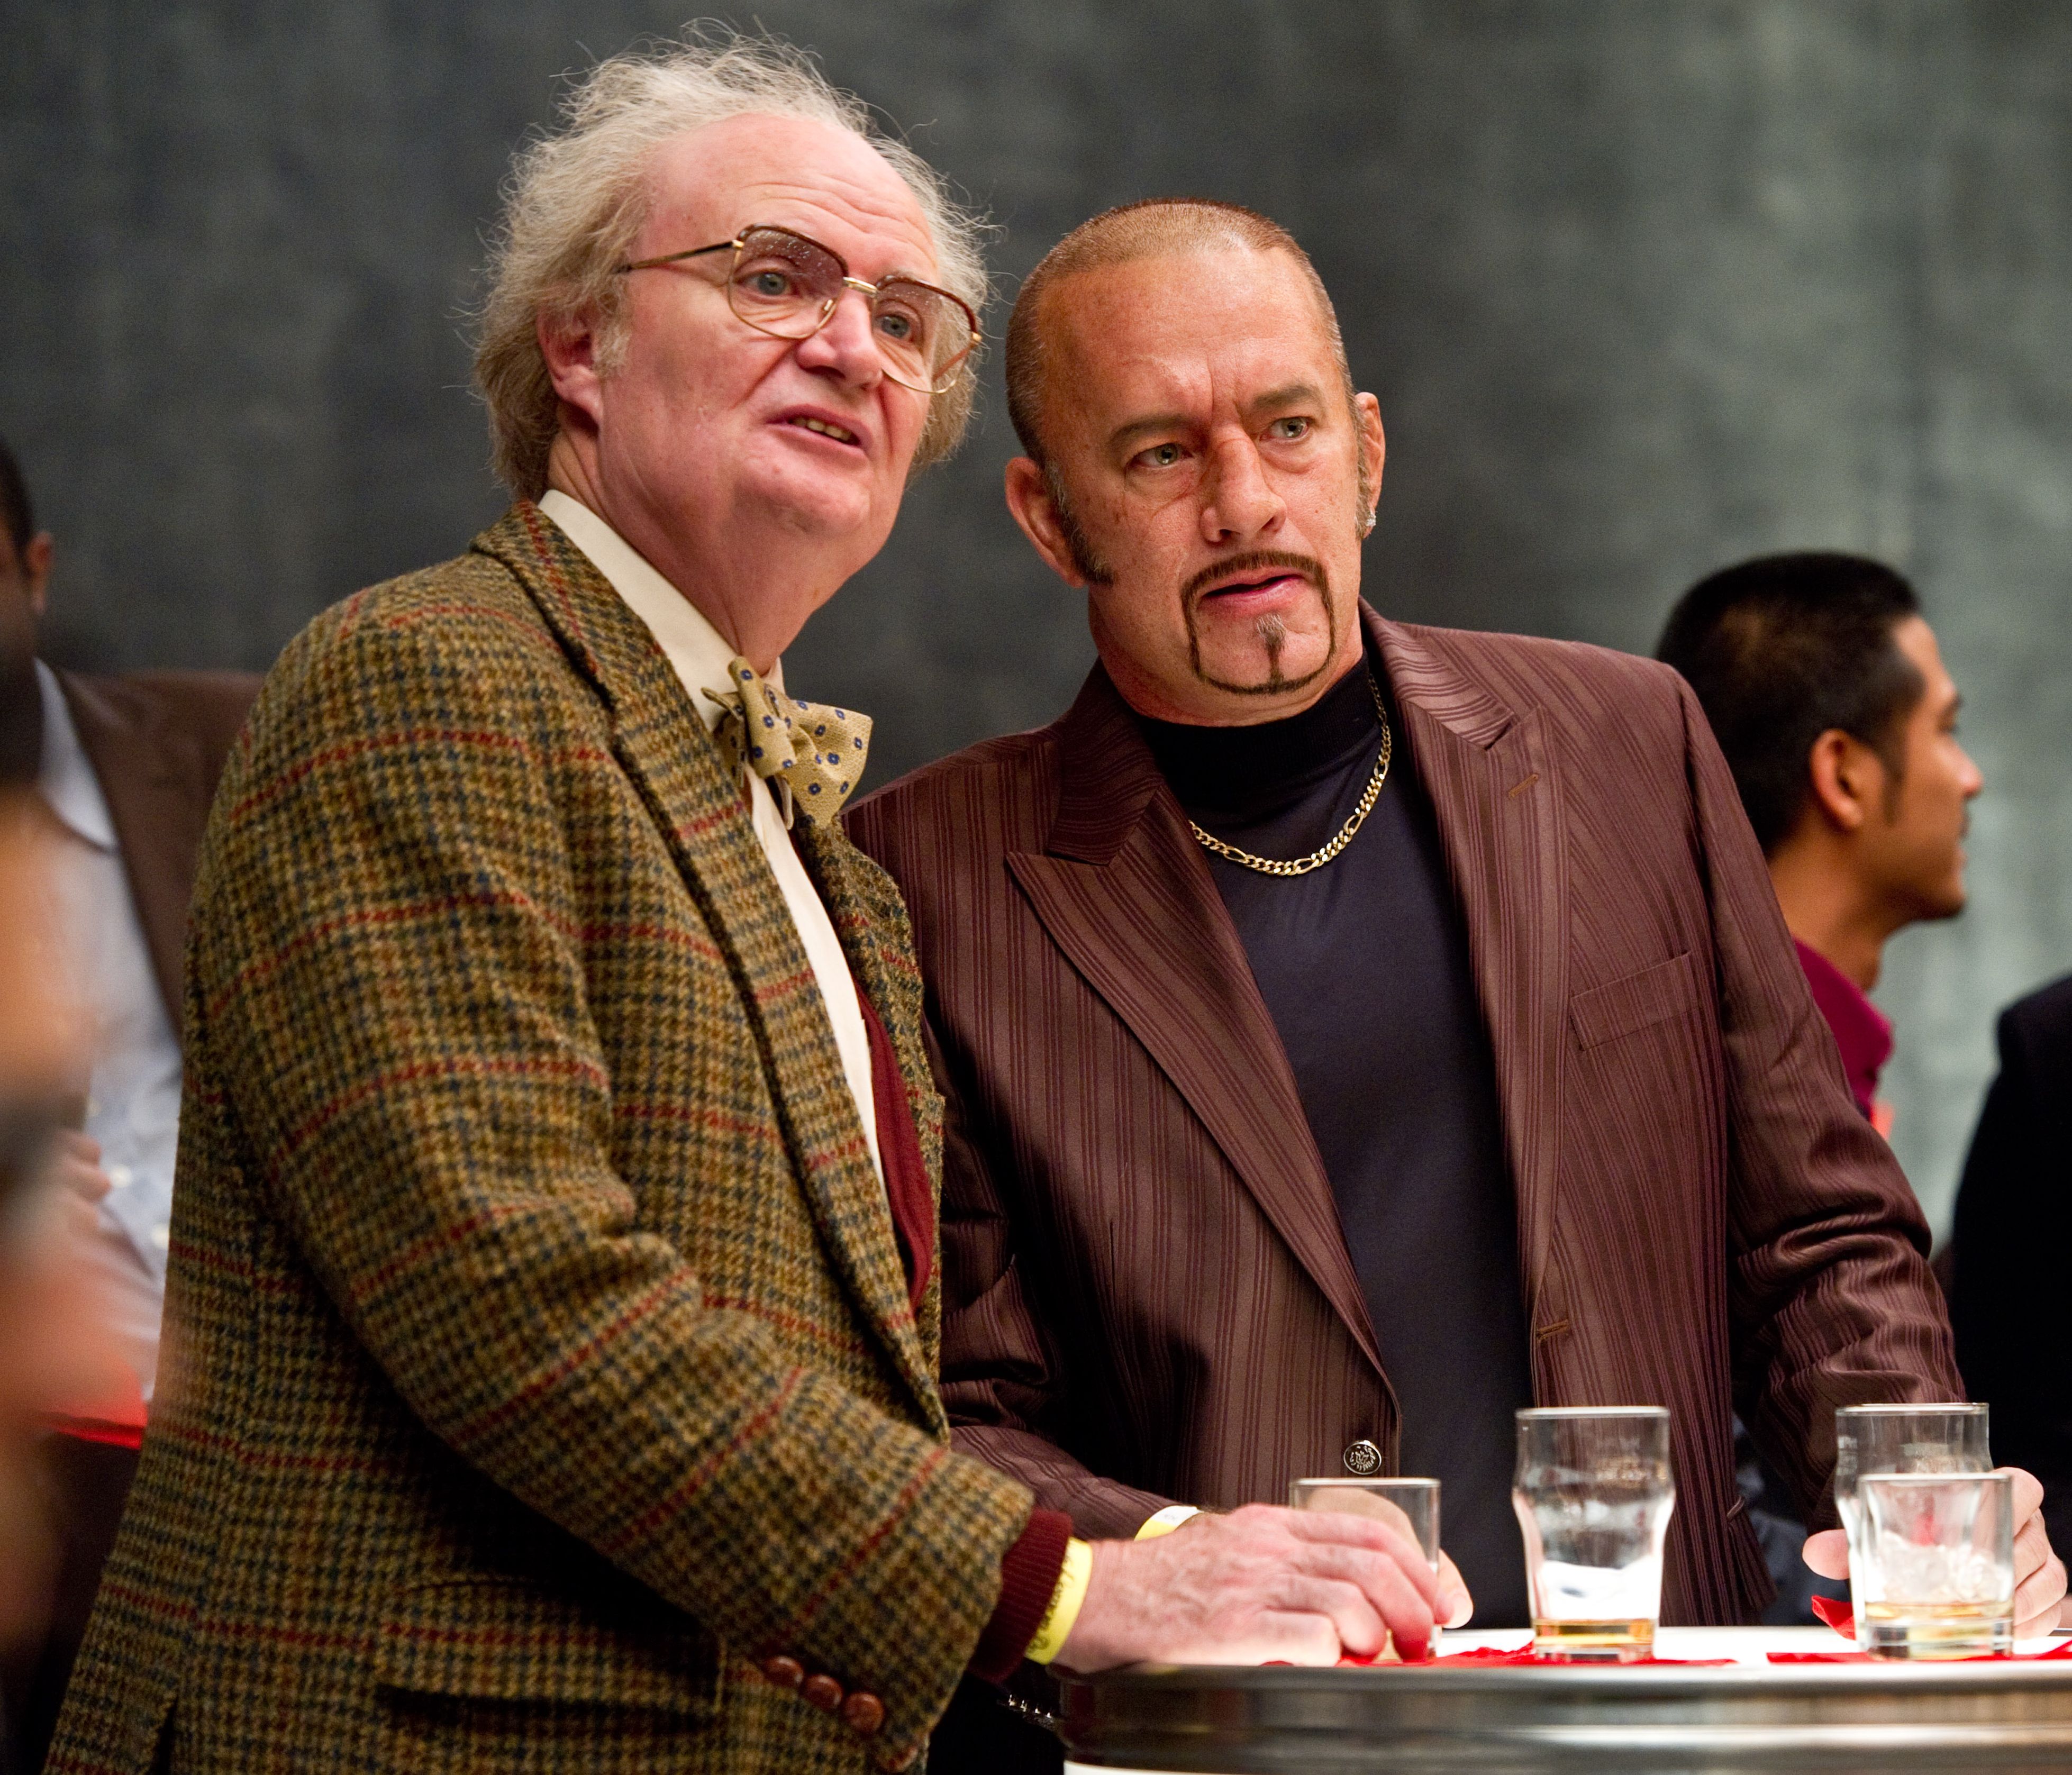 Jim Broadbent and Tom Hanks as Dermot Hoggins having a drink